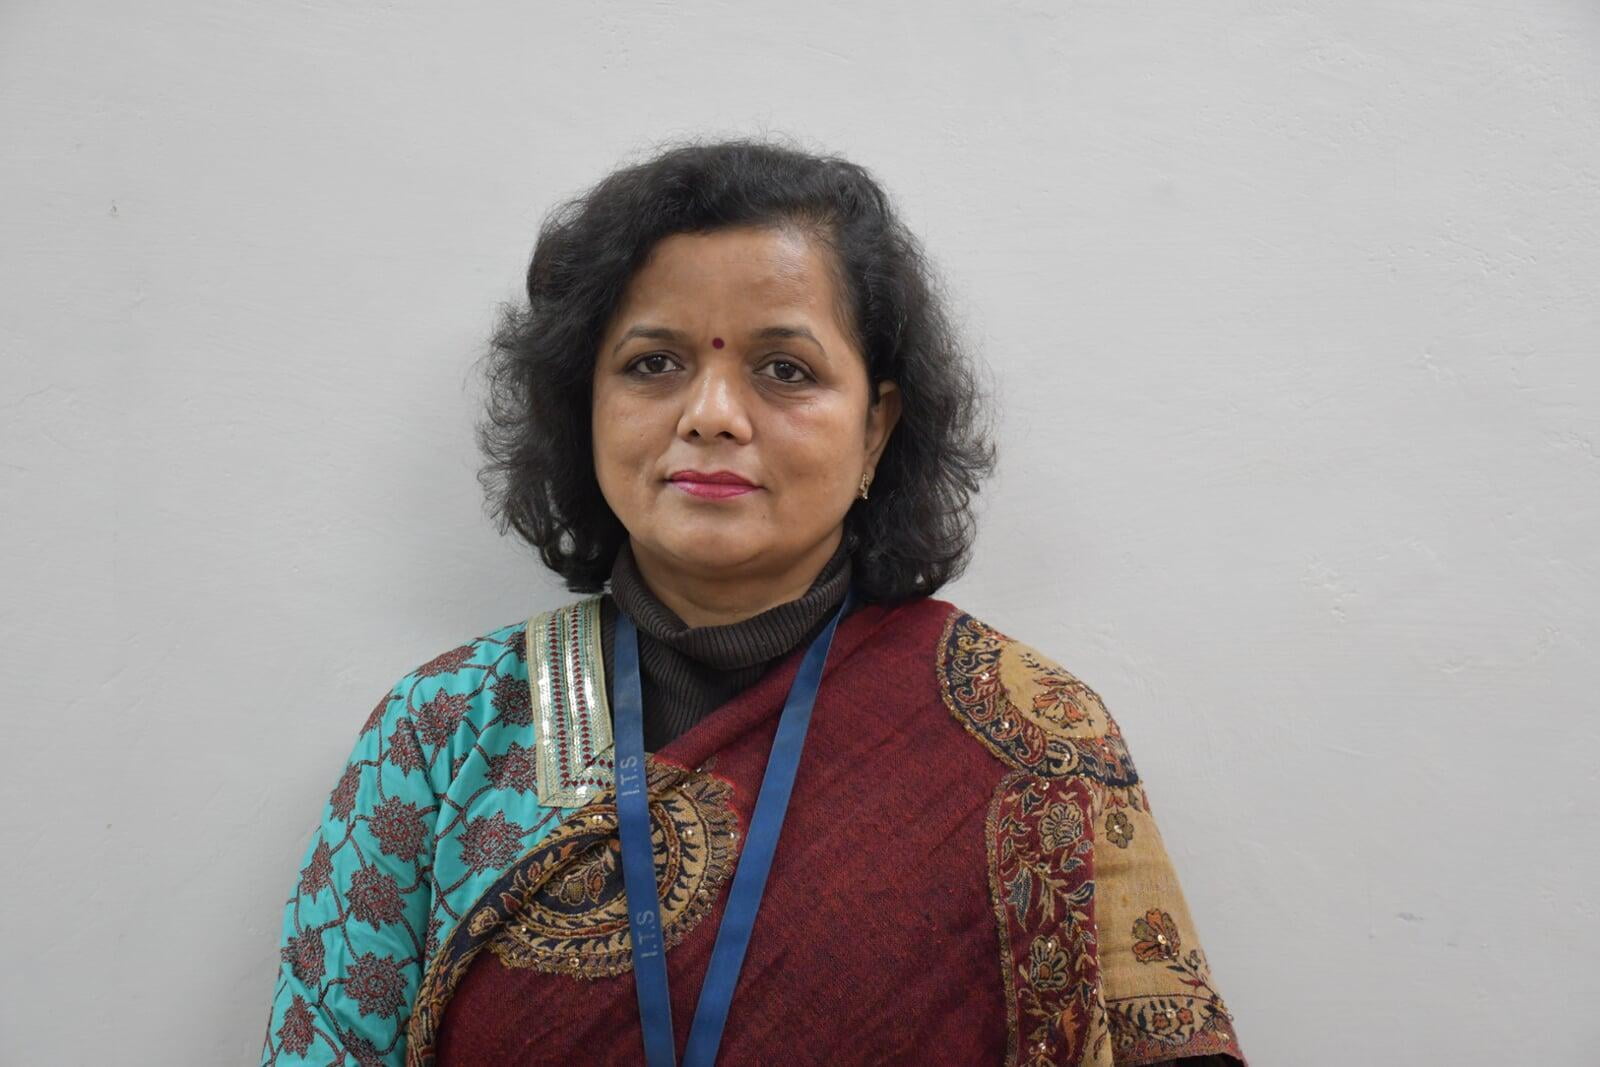 Dr. Deepa Singh B.Tech Civil Engineering Faculty at ITS